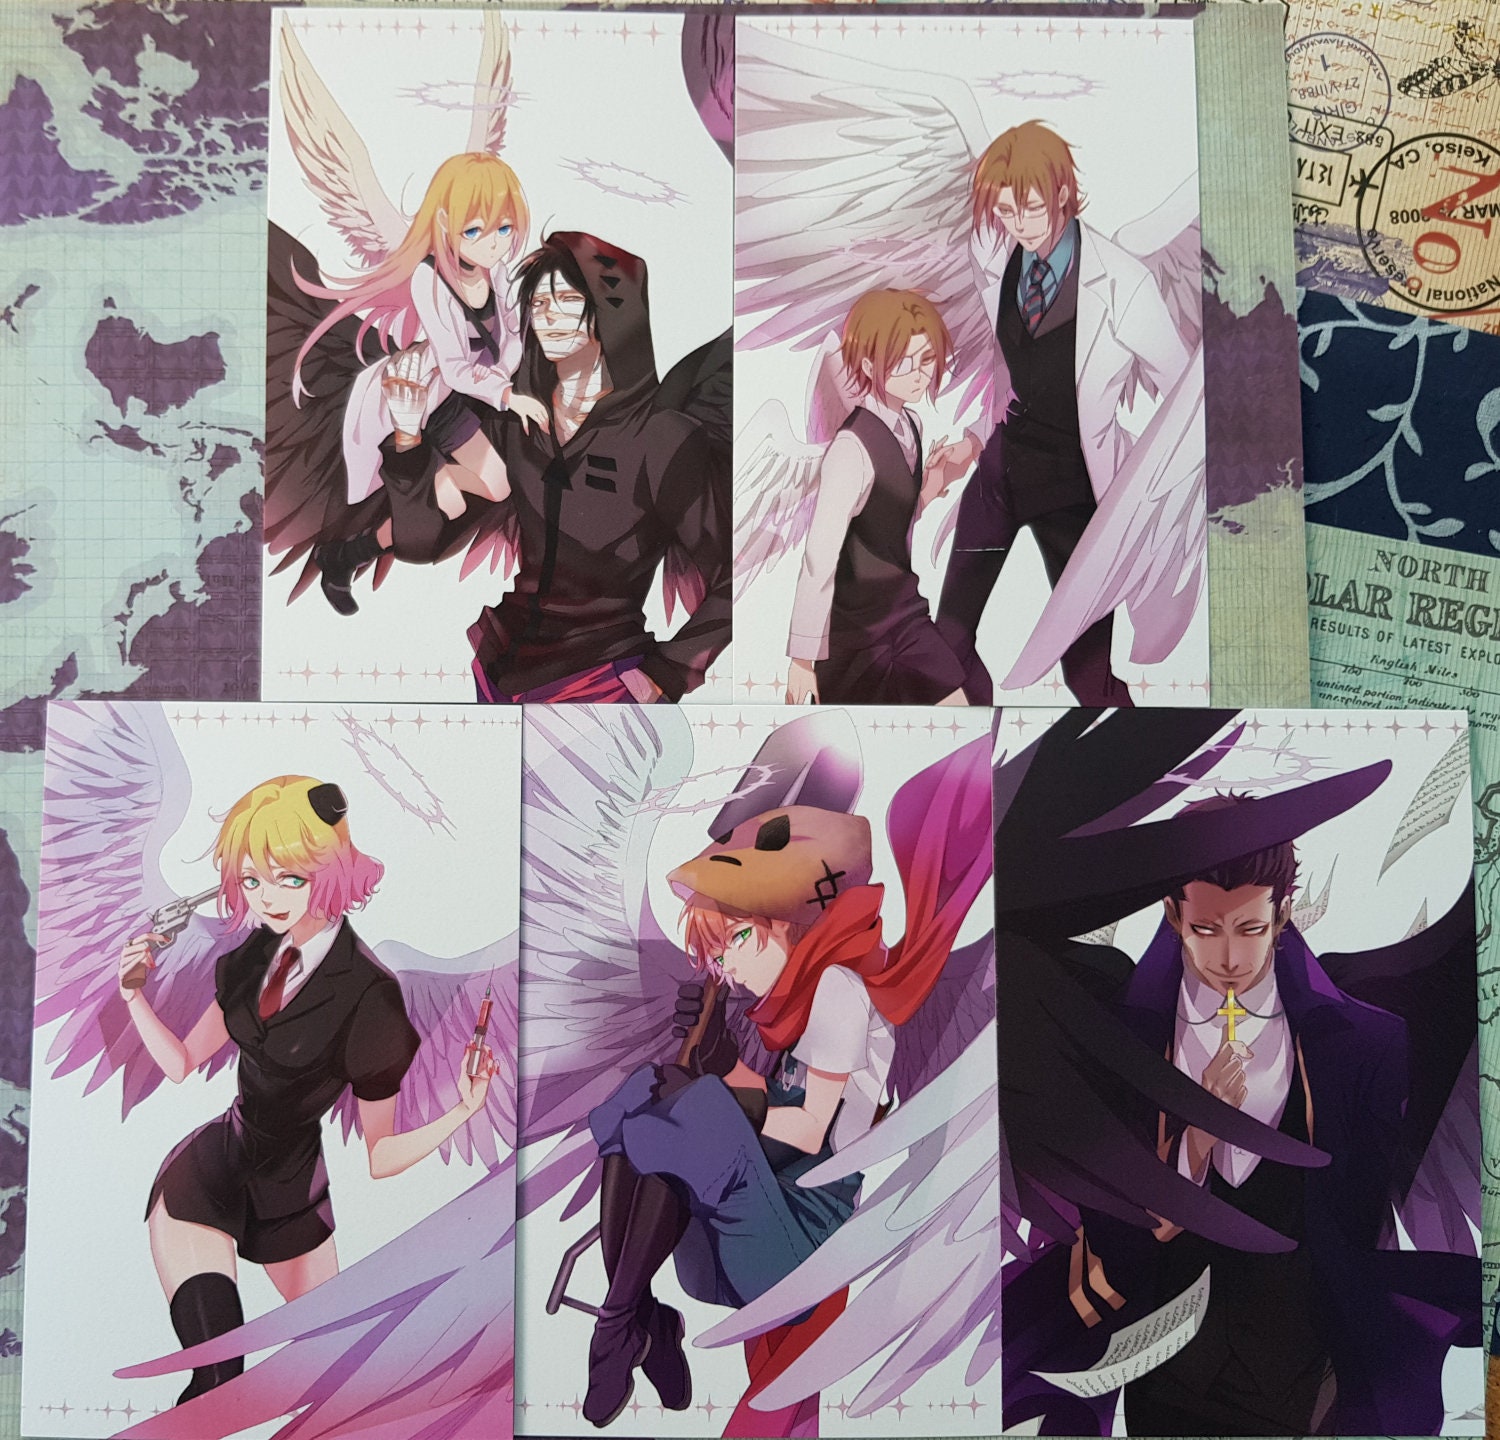 Anime Satsuriku no Tenshi Angels Of Death manga Wall Scroll Poster  cosplay8x11